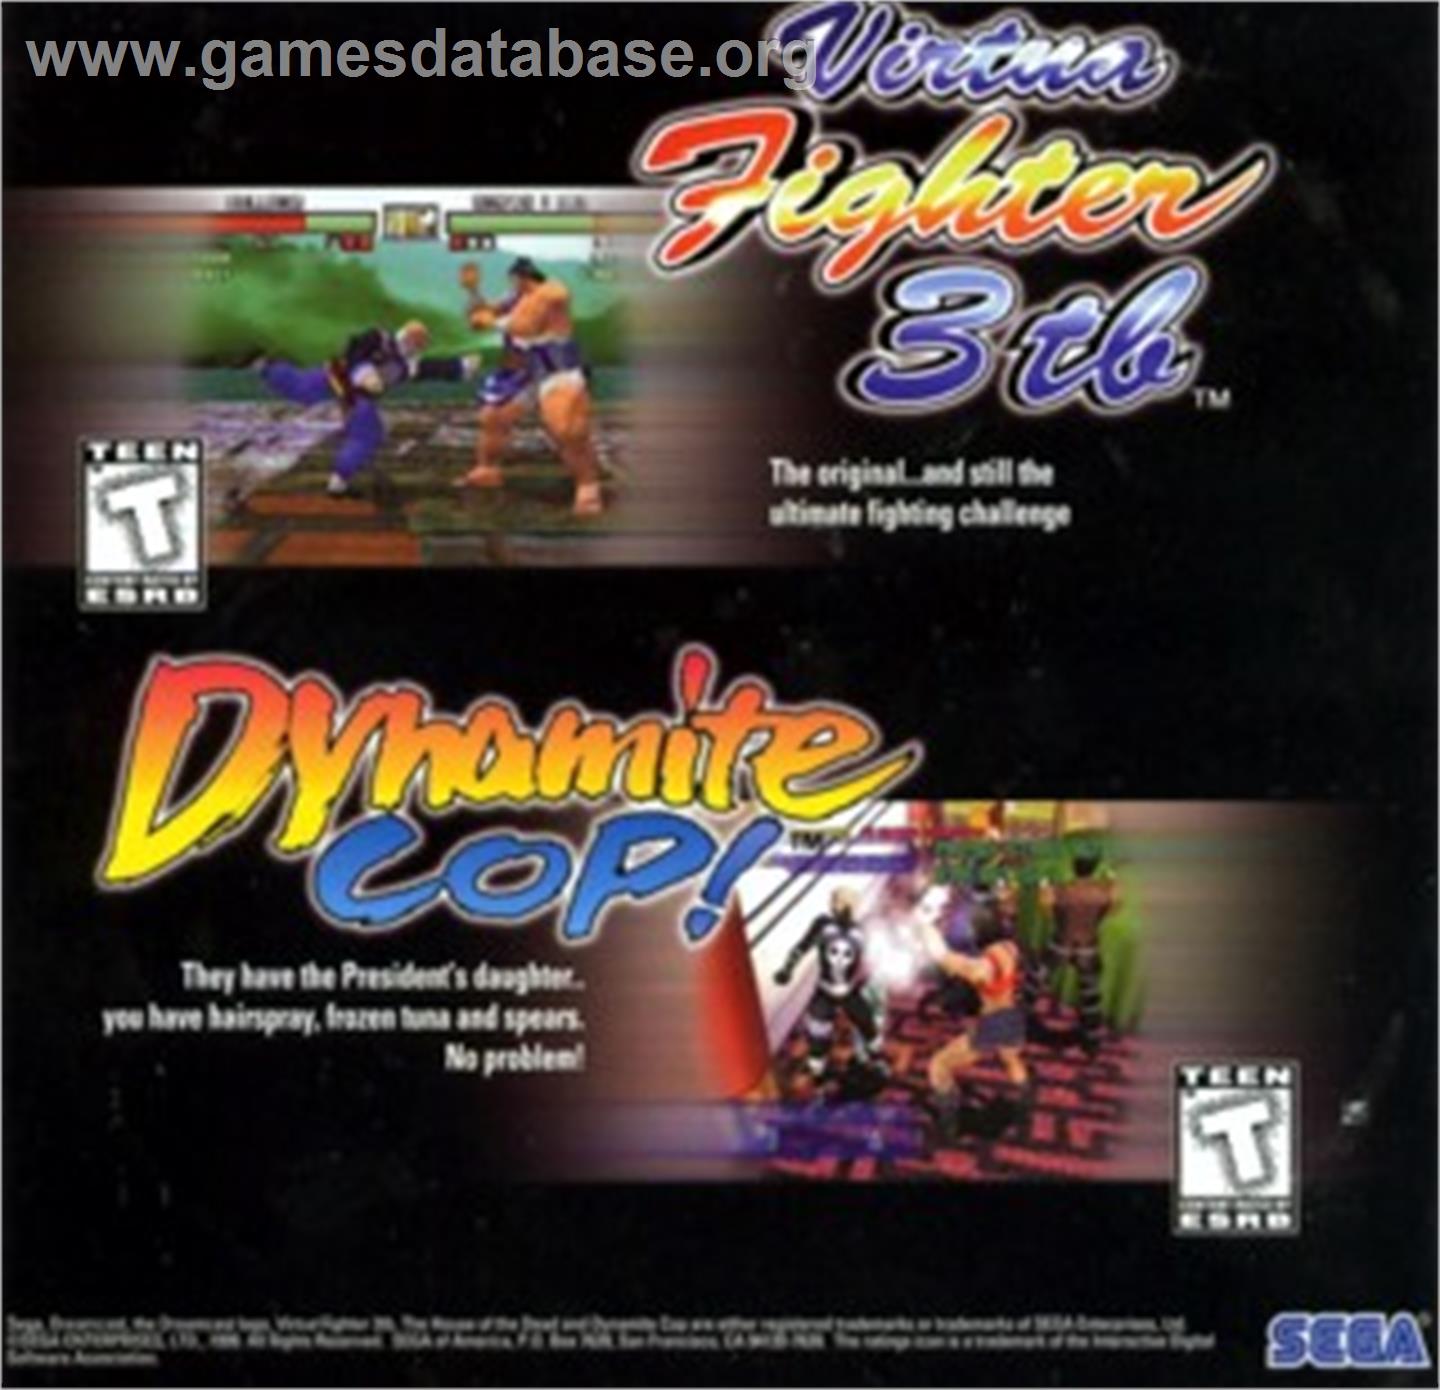 Dynamite Cop - Sega Dreamcast - Artwork - Advert